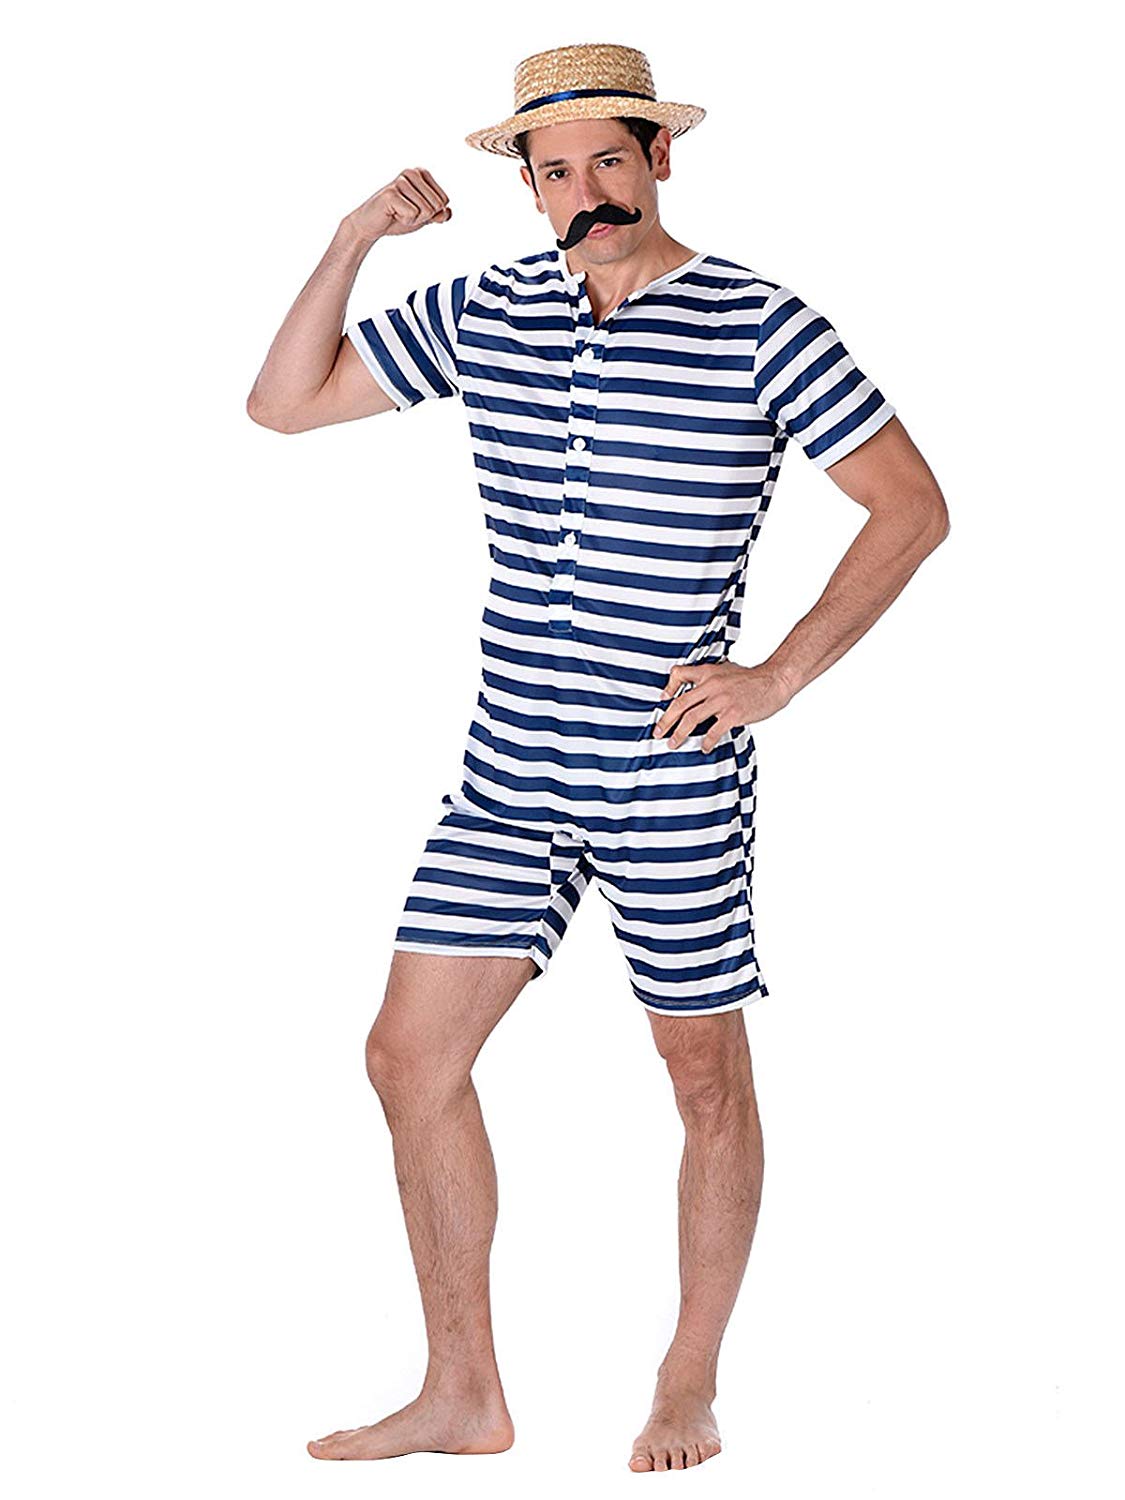 Karnival 82100 Male Old Time Bathing Suit Costume Men Multi Medium Toptoy